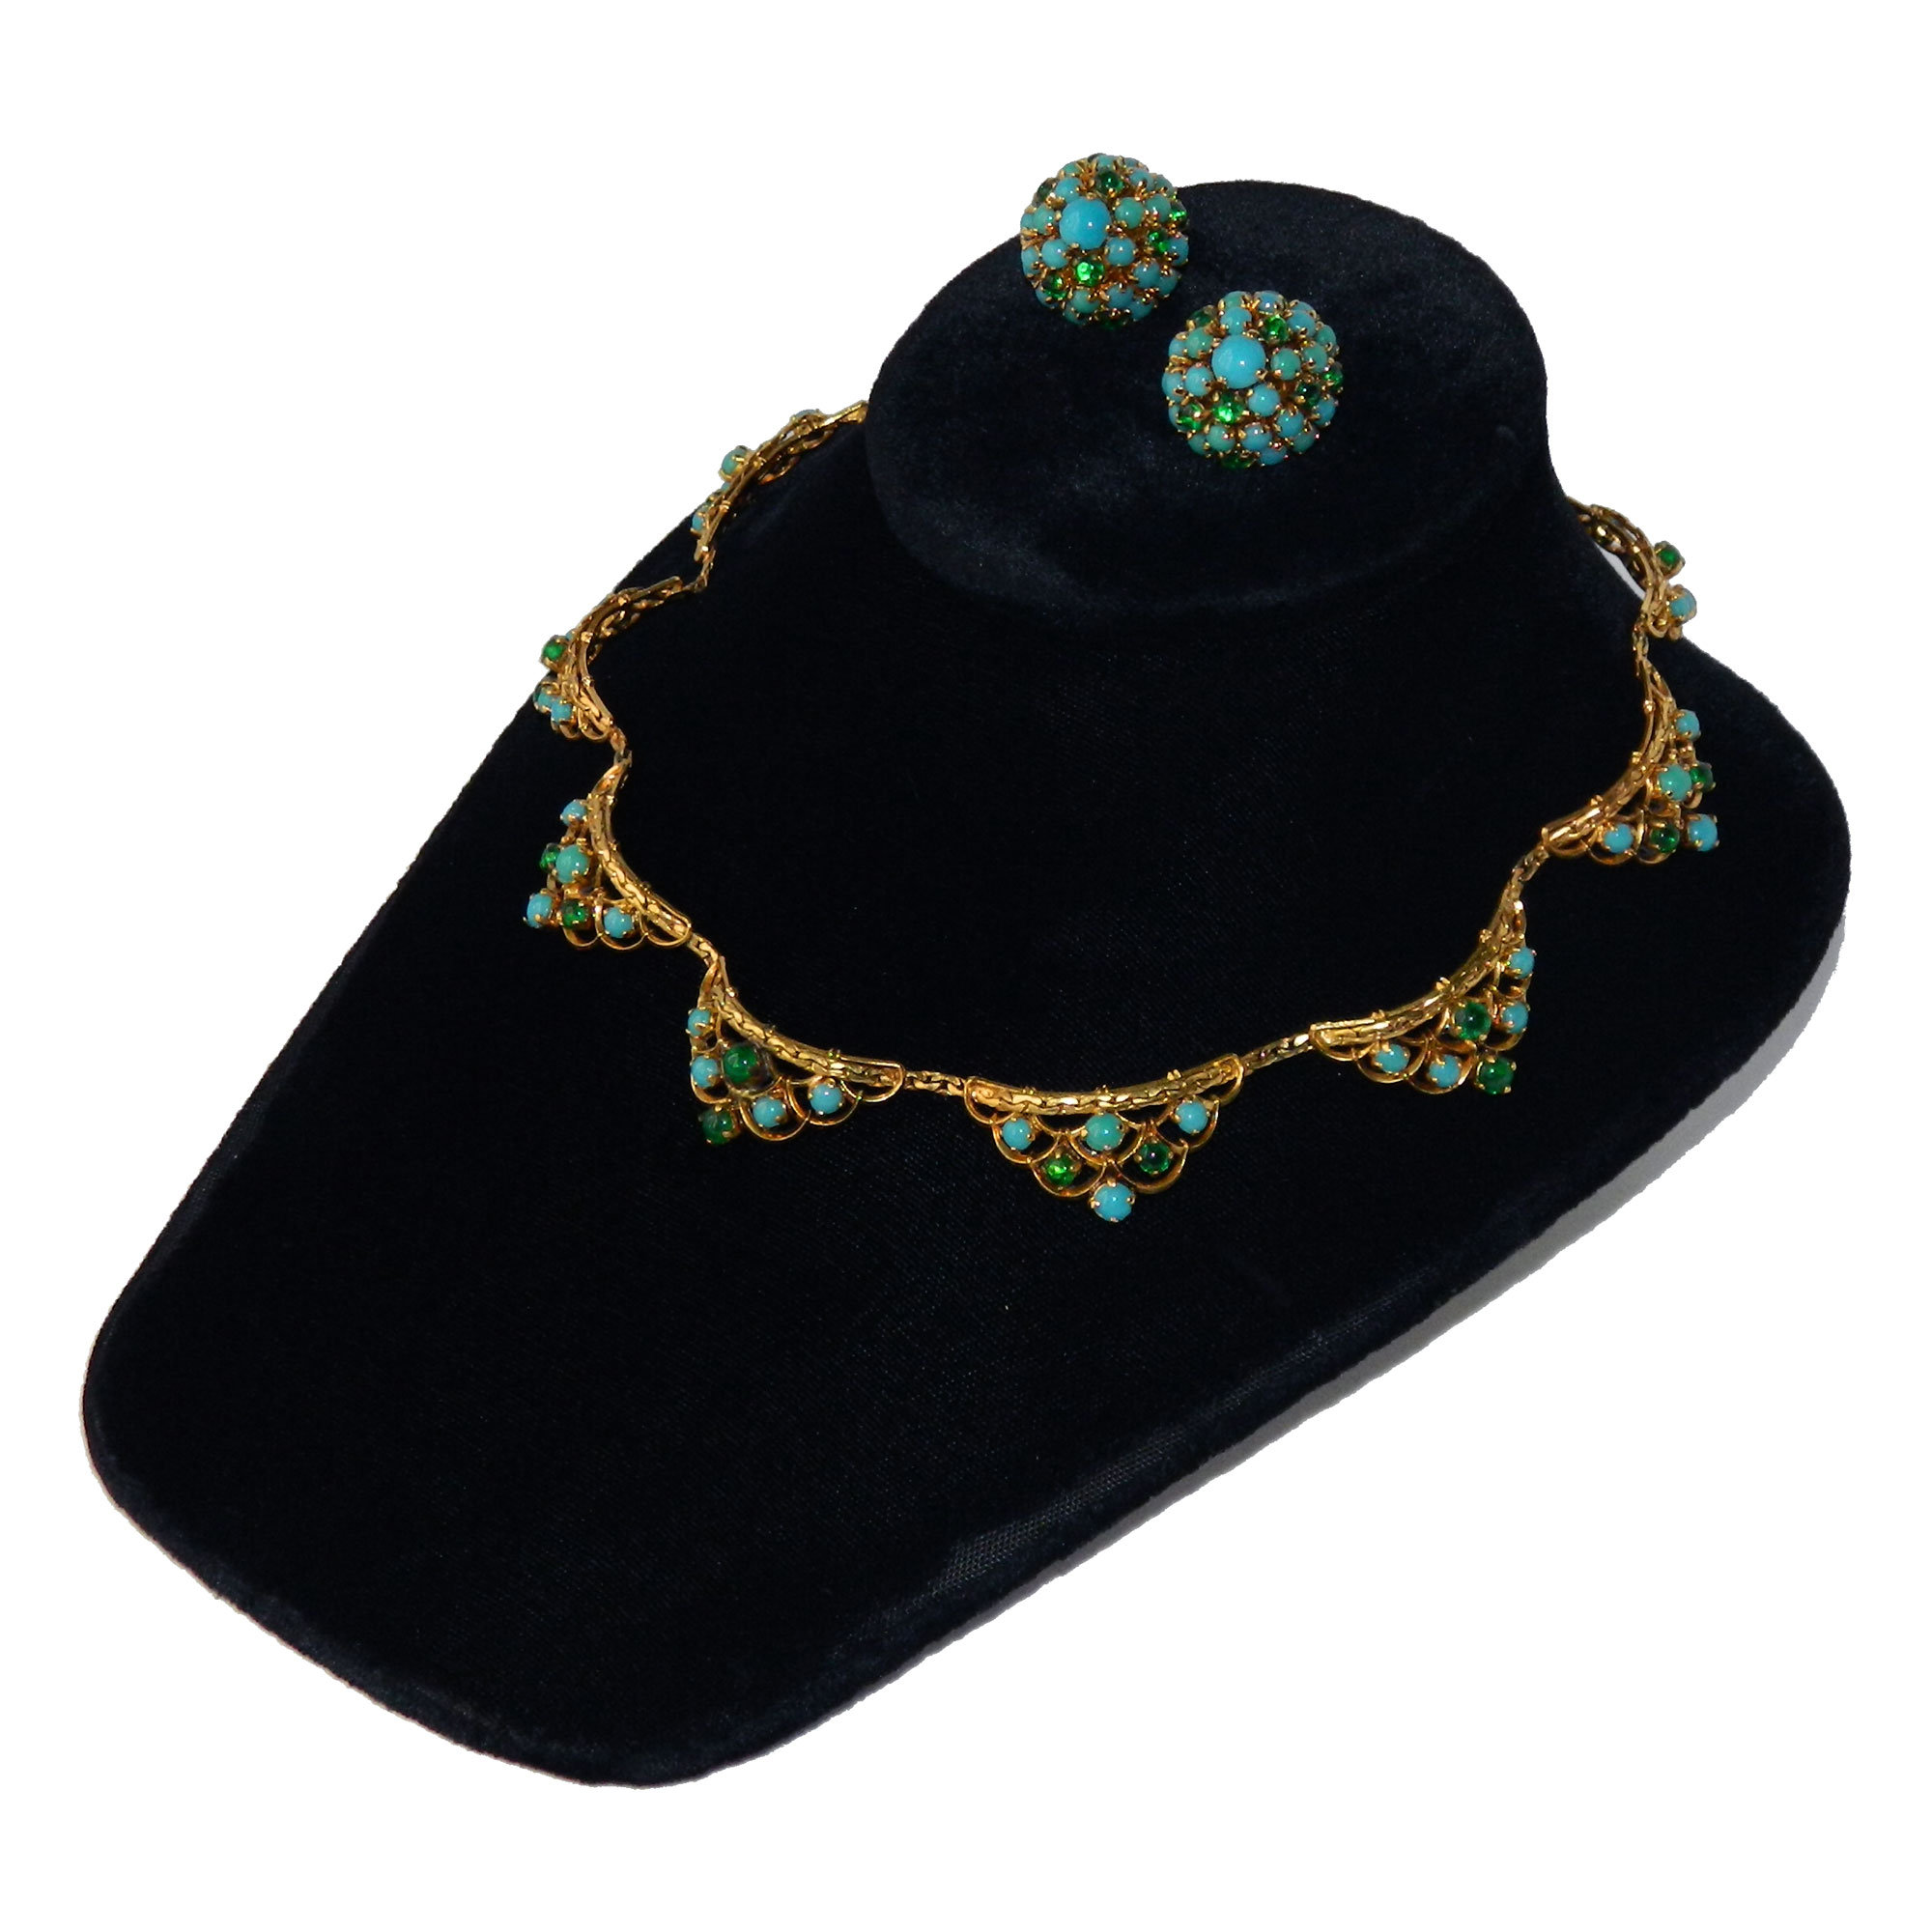 1960s Christian Dior rhinestone necklace set